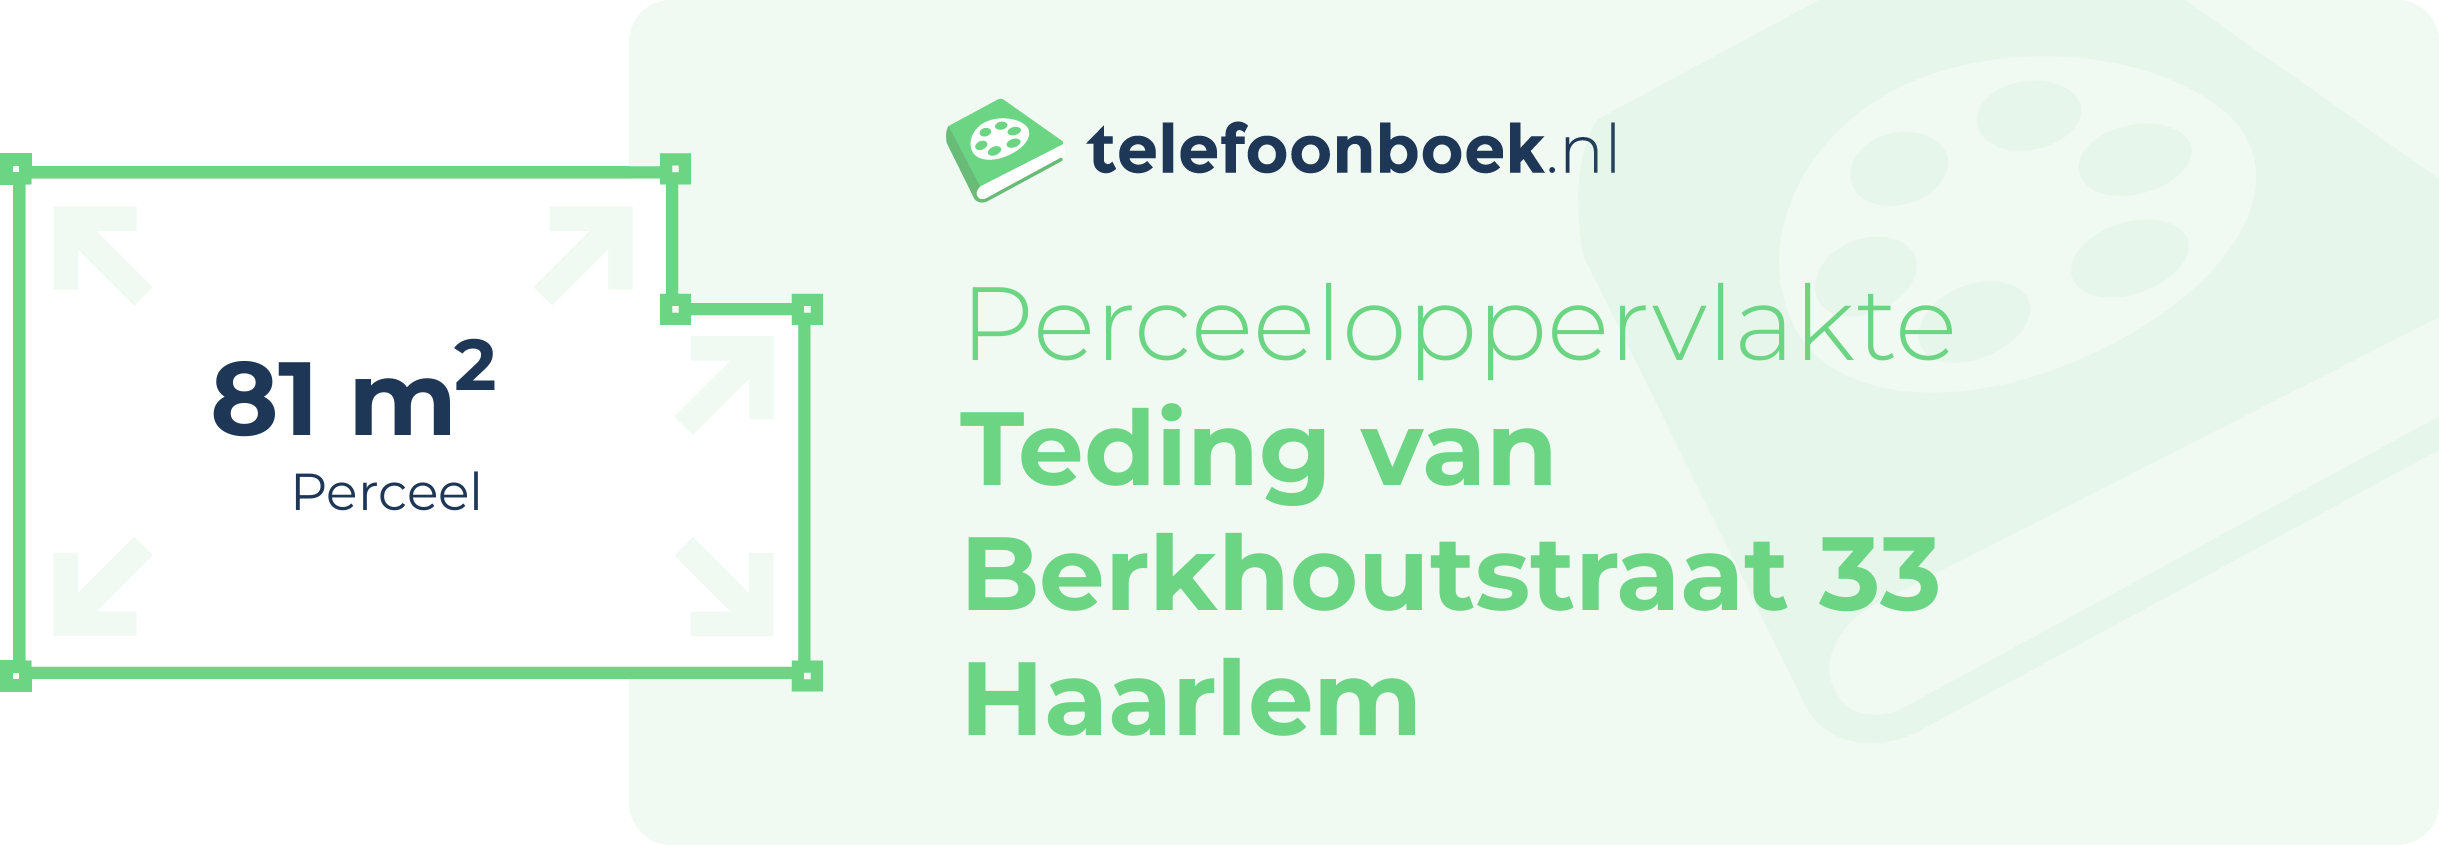 Perceeloppervlakte Teding Van Berkhoutstraat 33 Haarlem